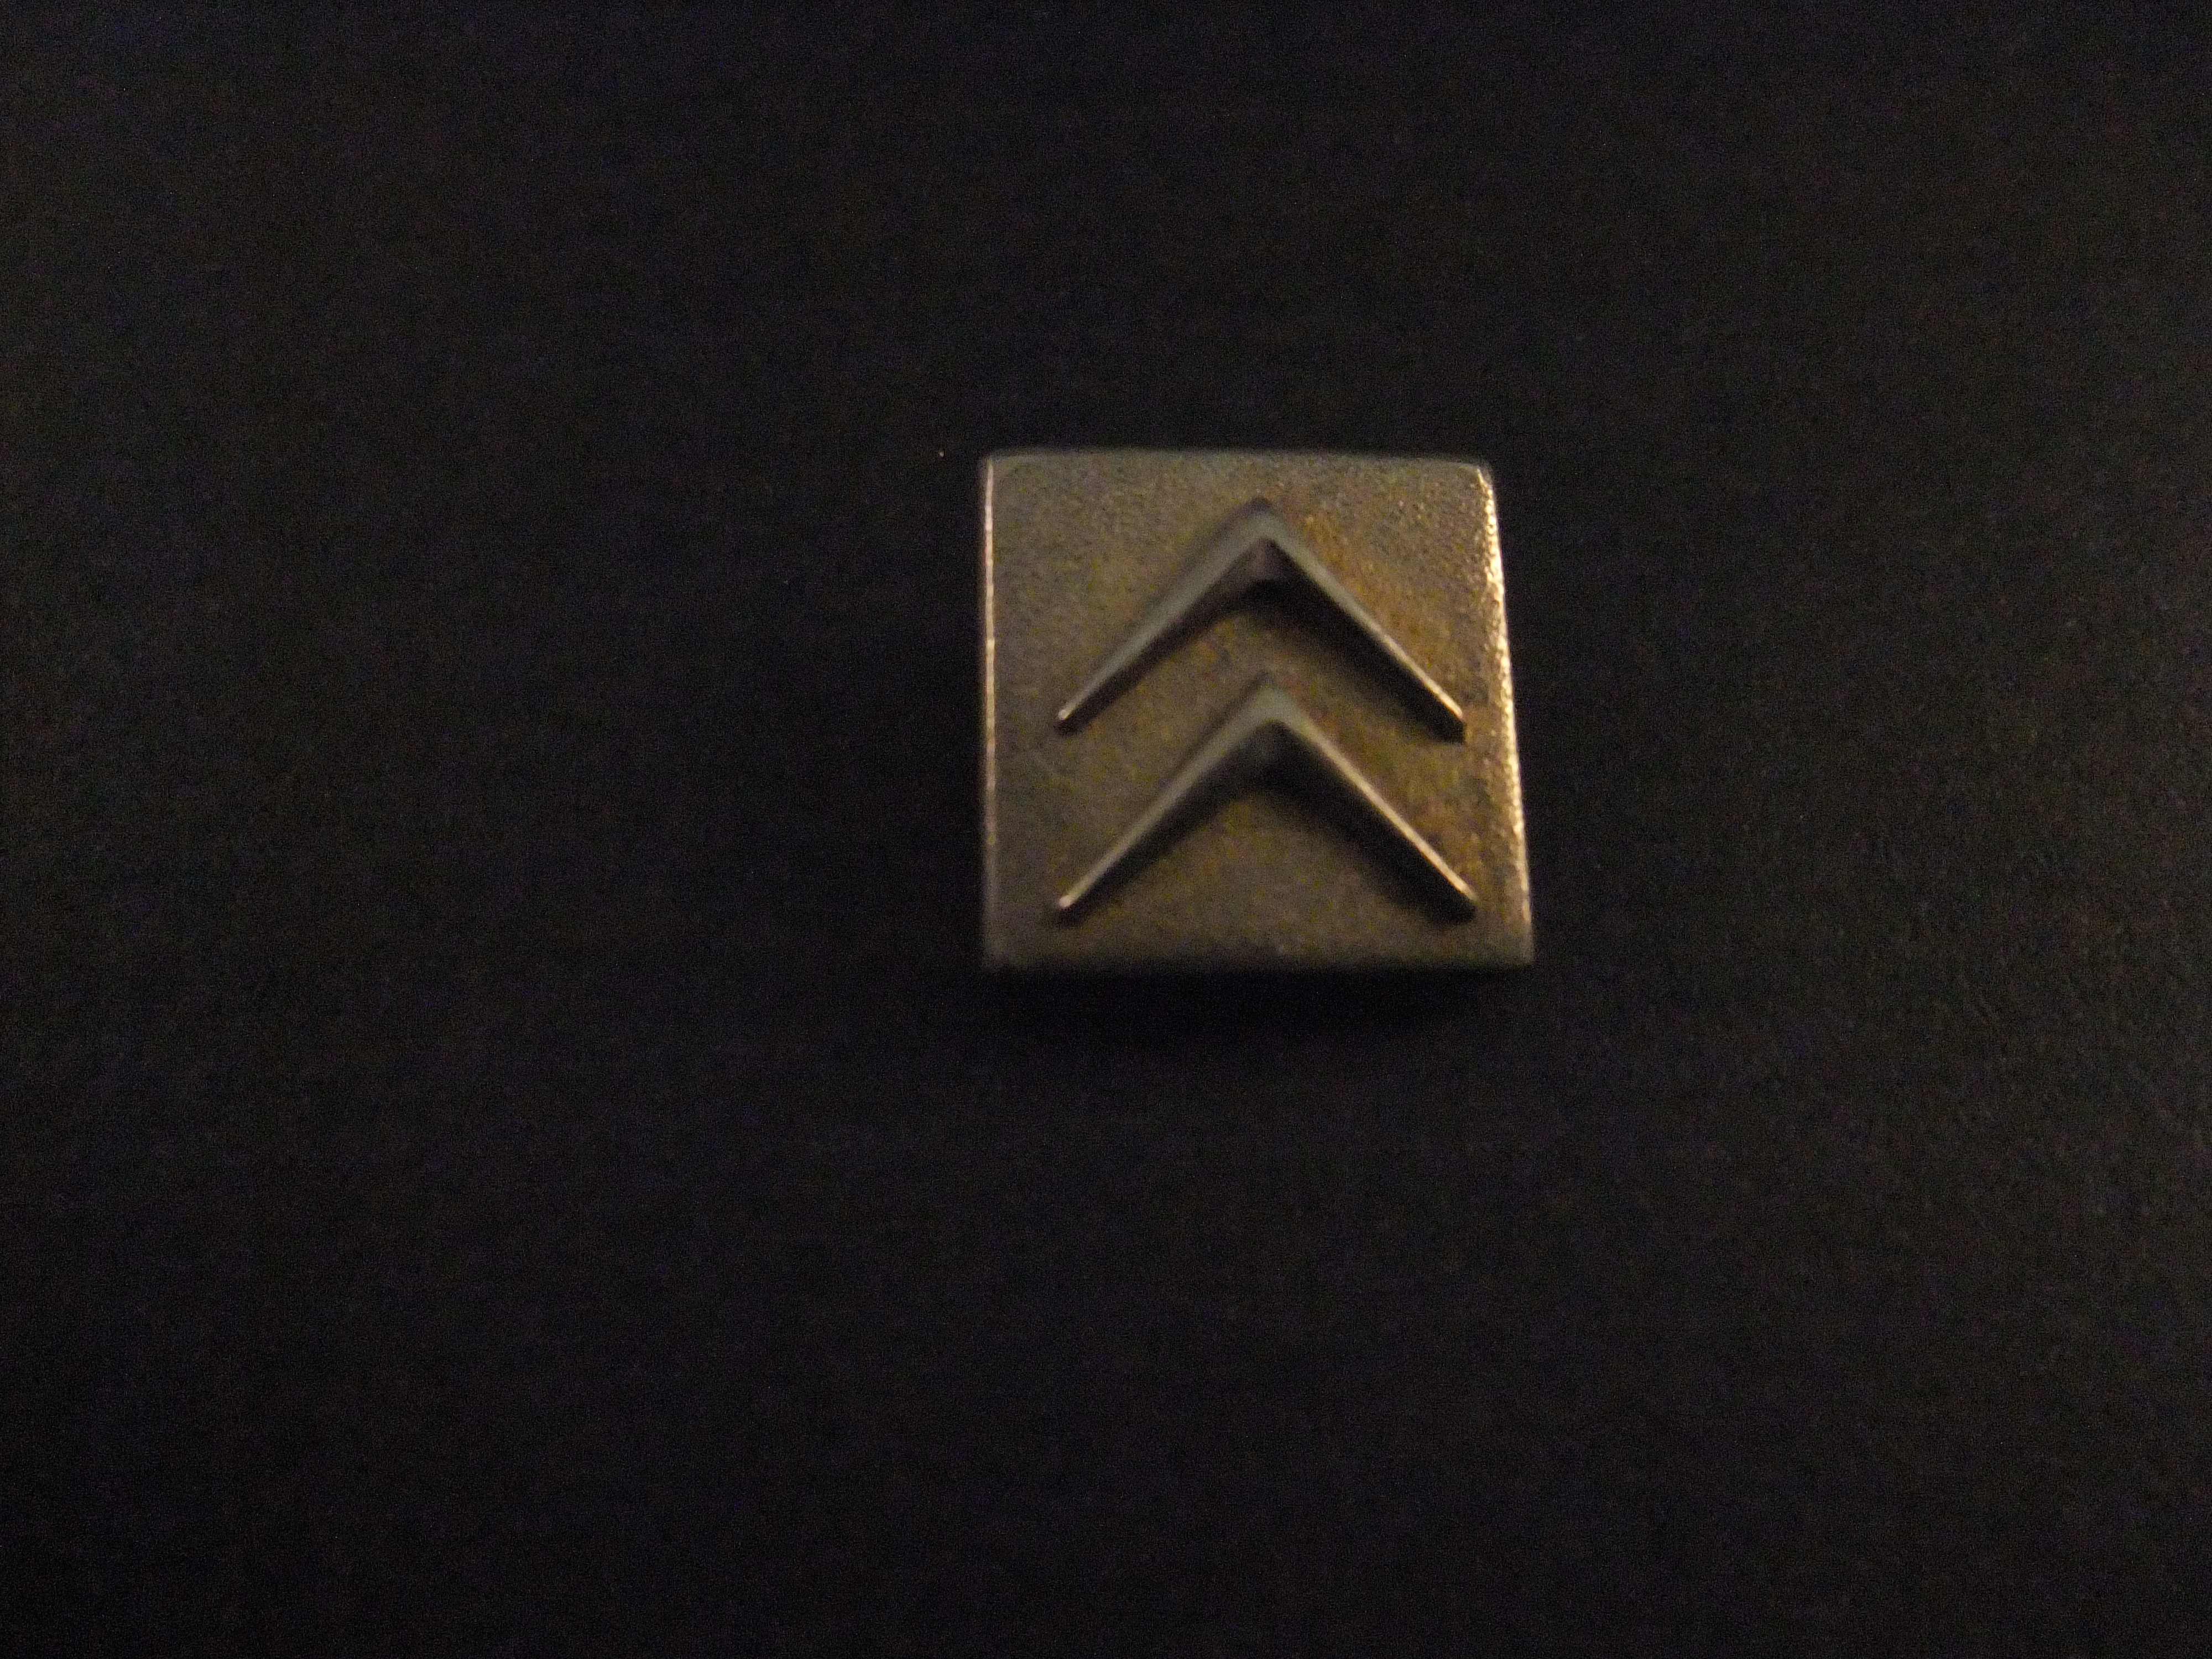 Citroën auto logo zilverkleurig